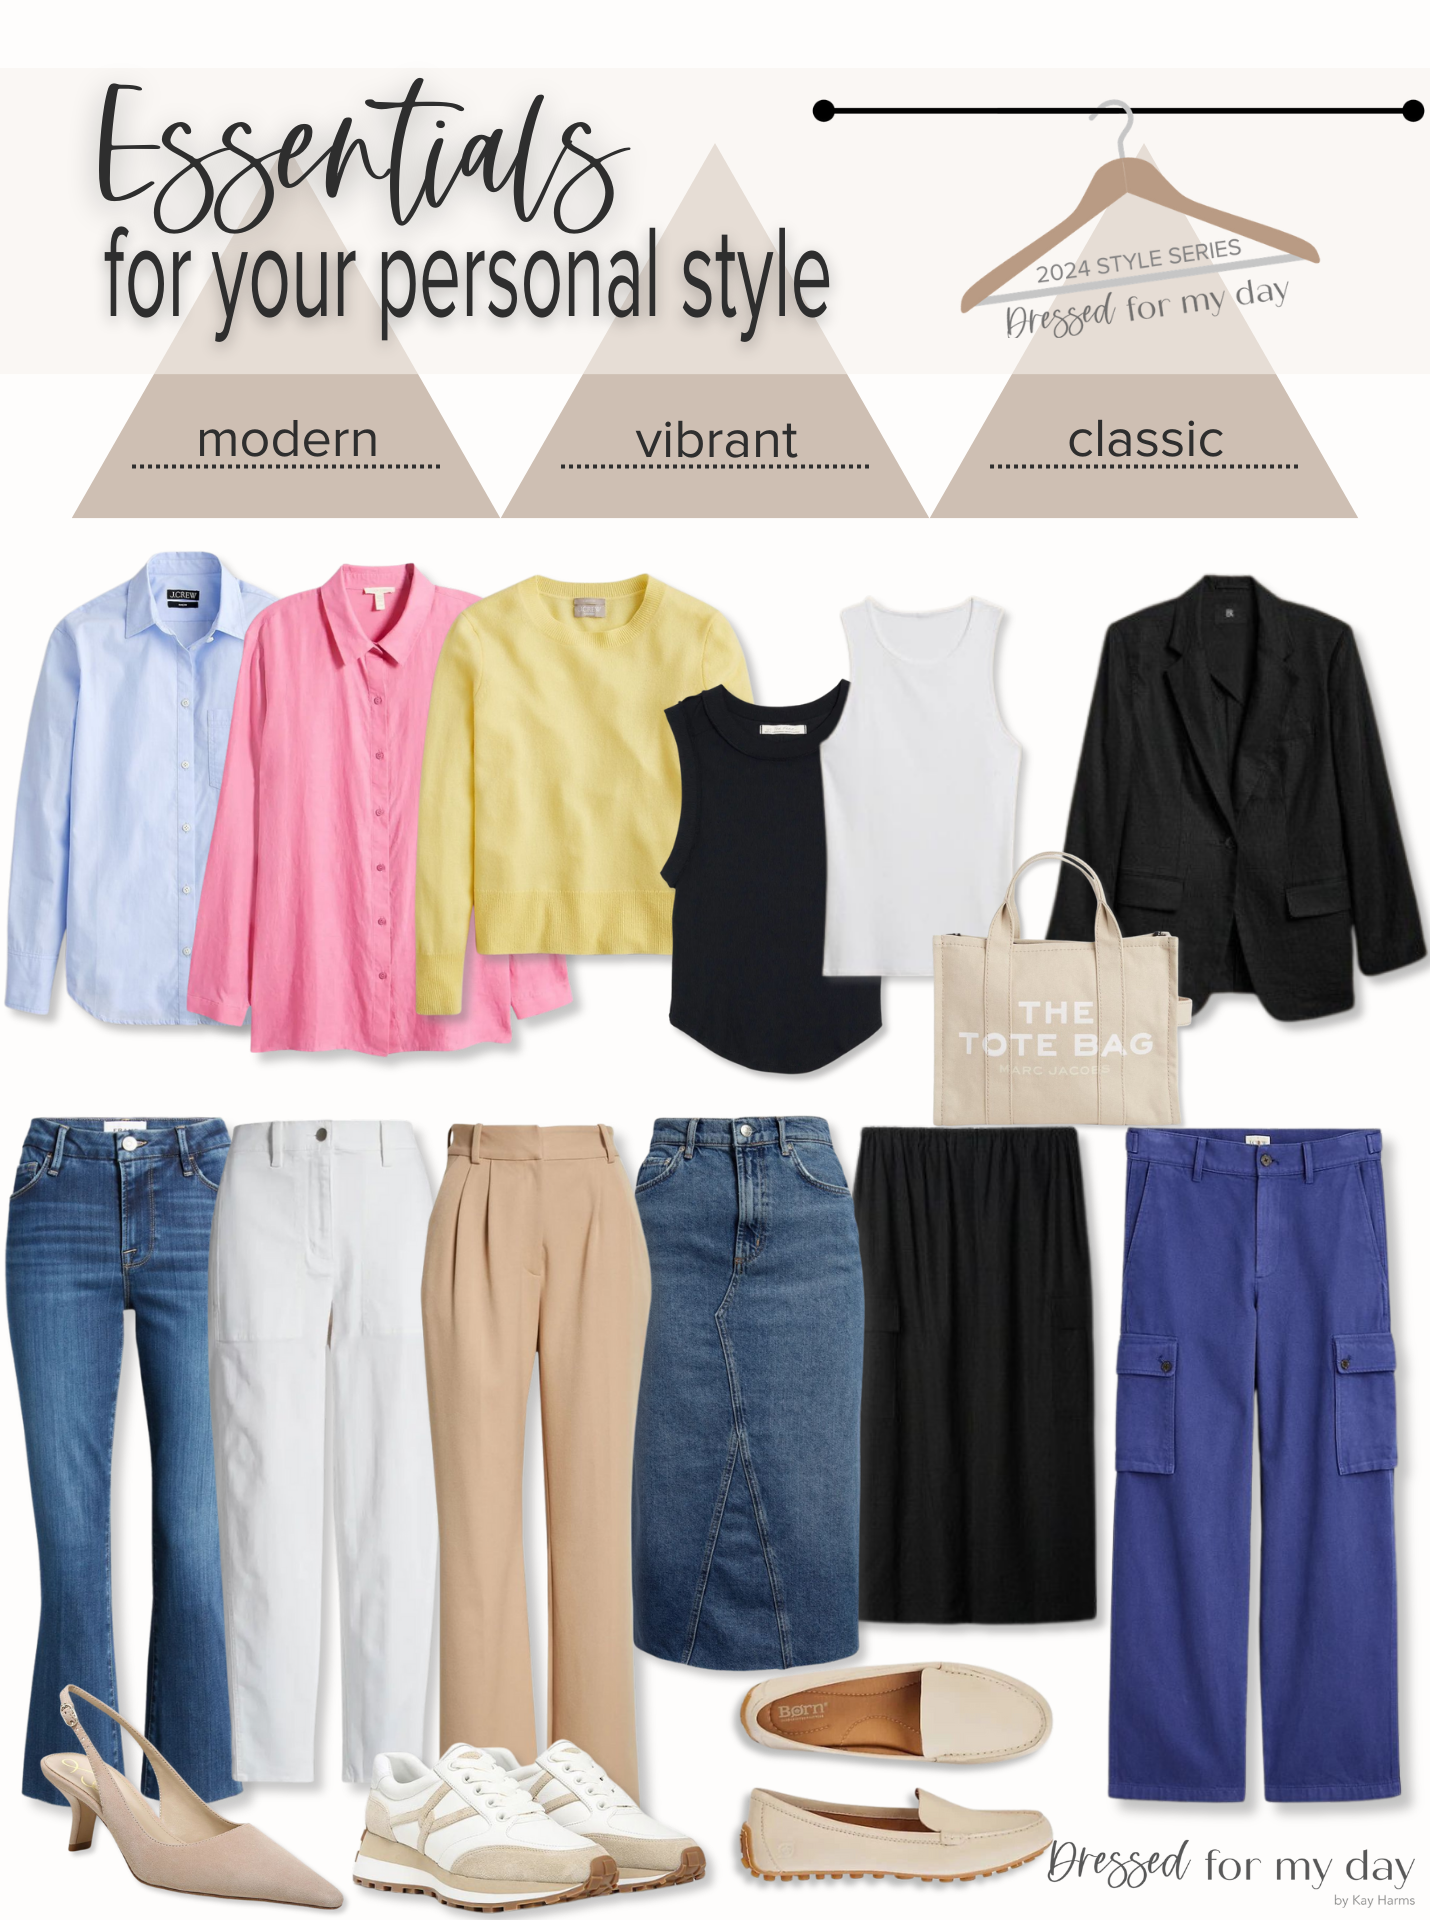 Style: Fashion guru's wardrobe essentials for a 'classy' and